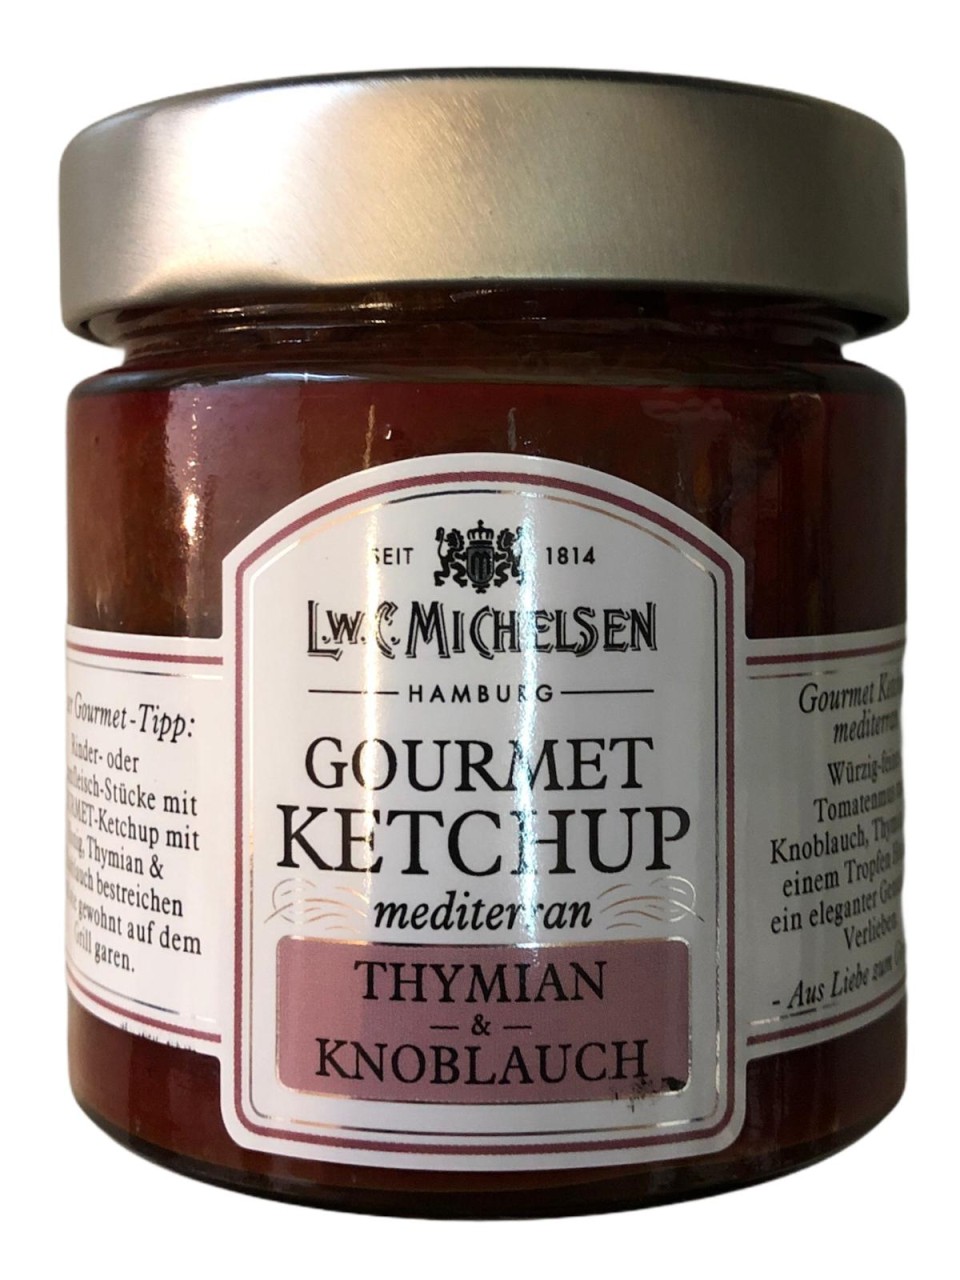 L.W.C. Michelsen Gourmet Ketschup Thymian & Knoblauch 212g